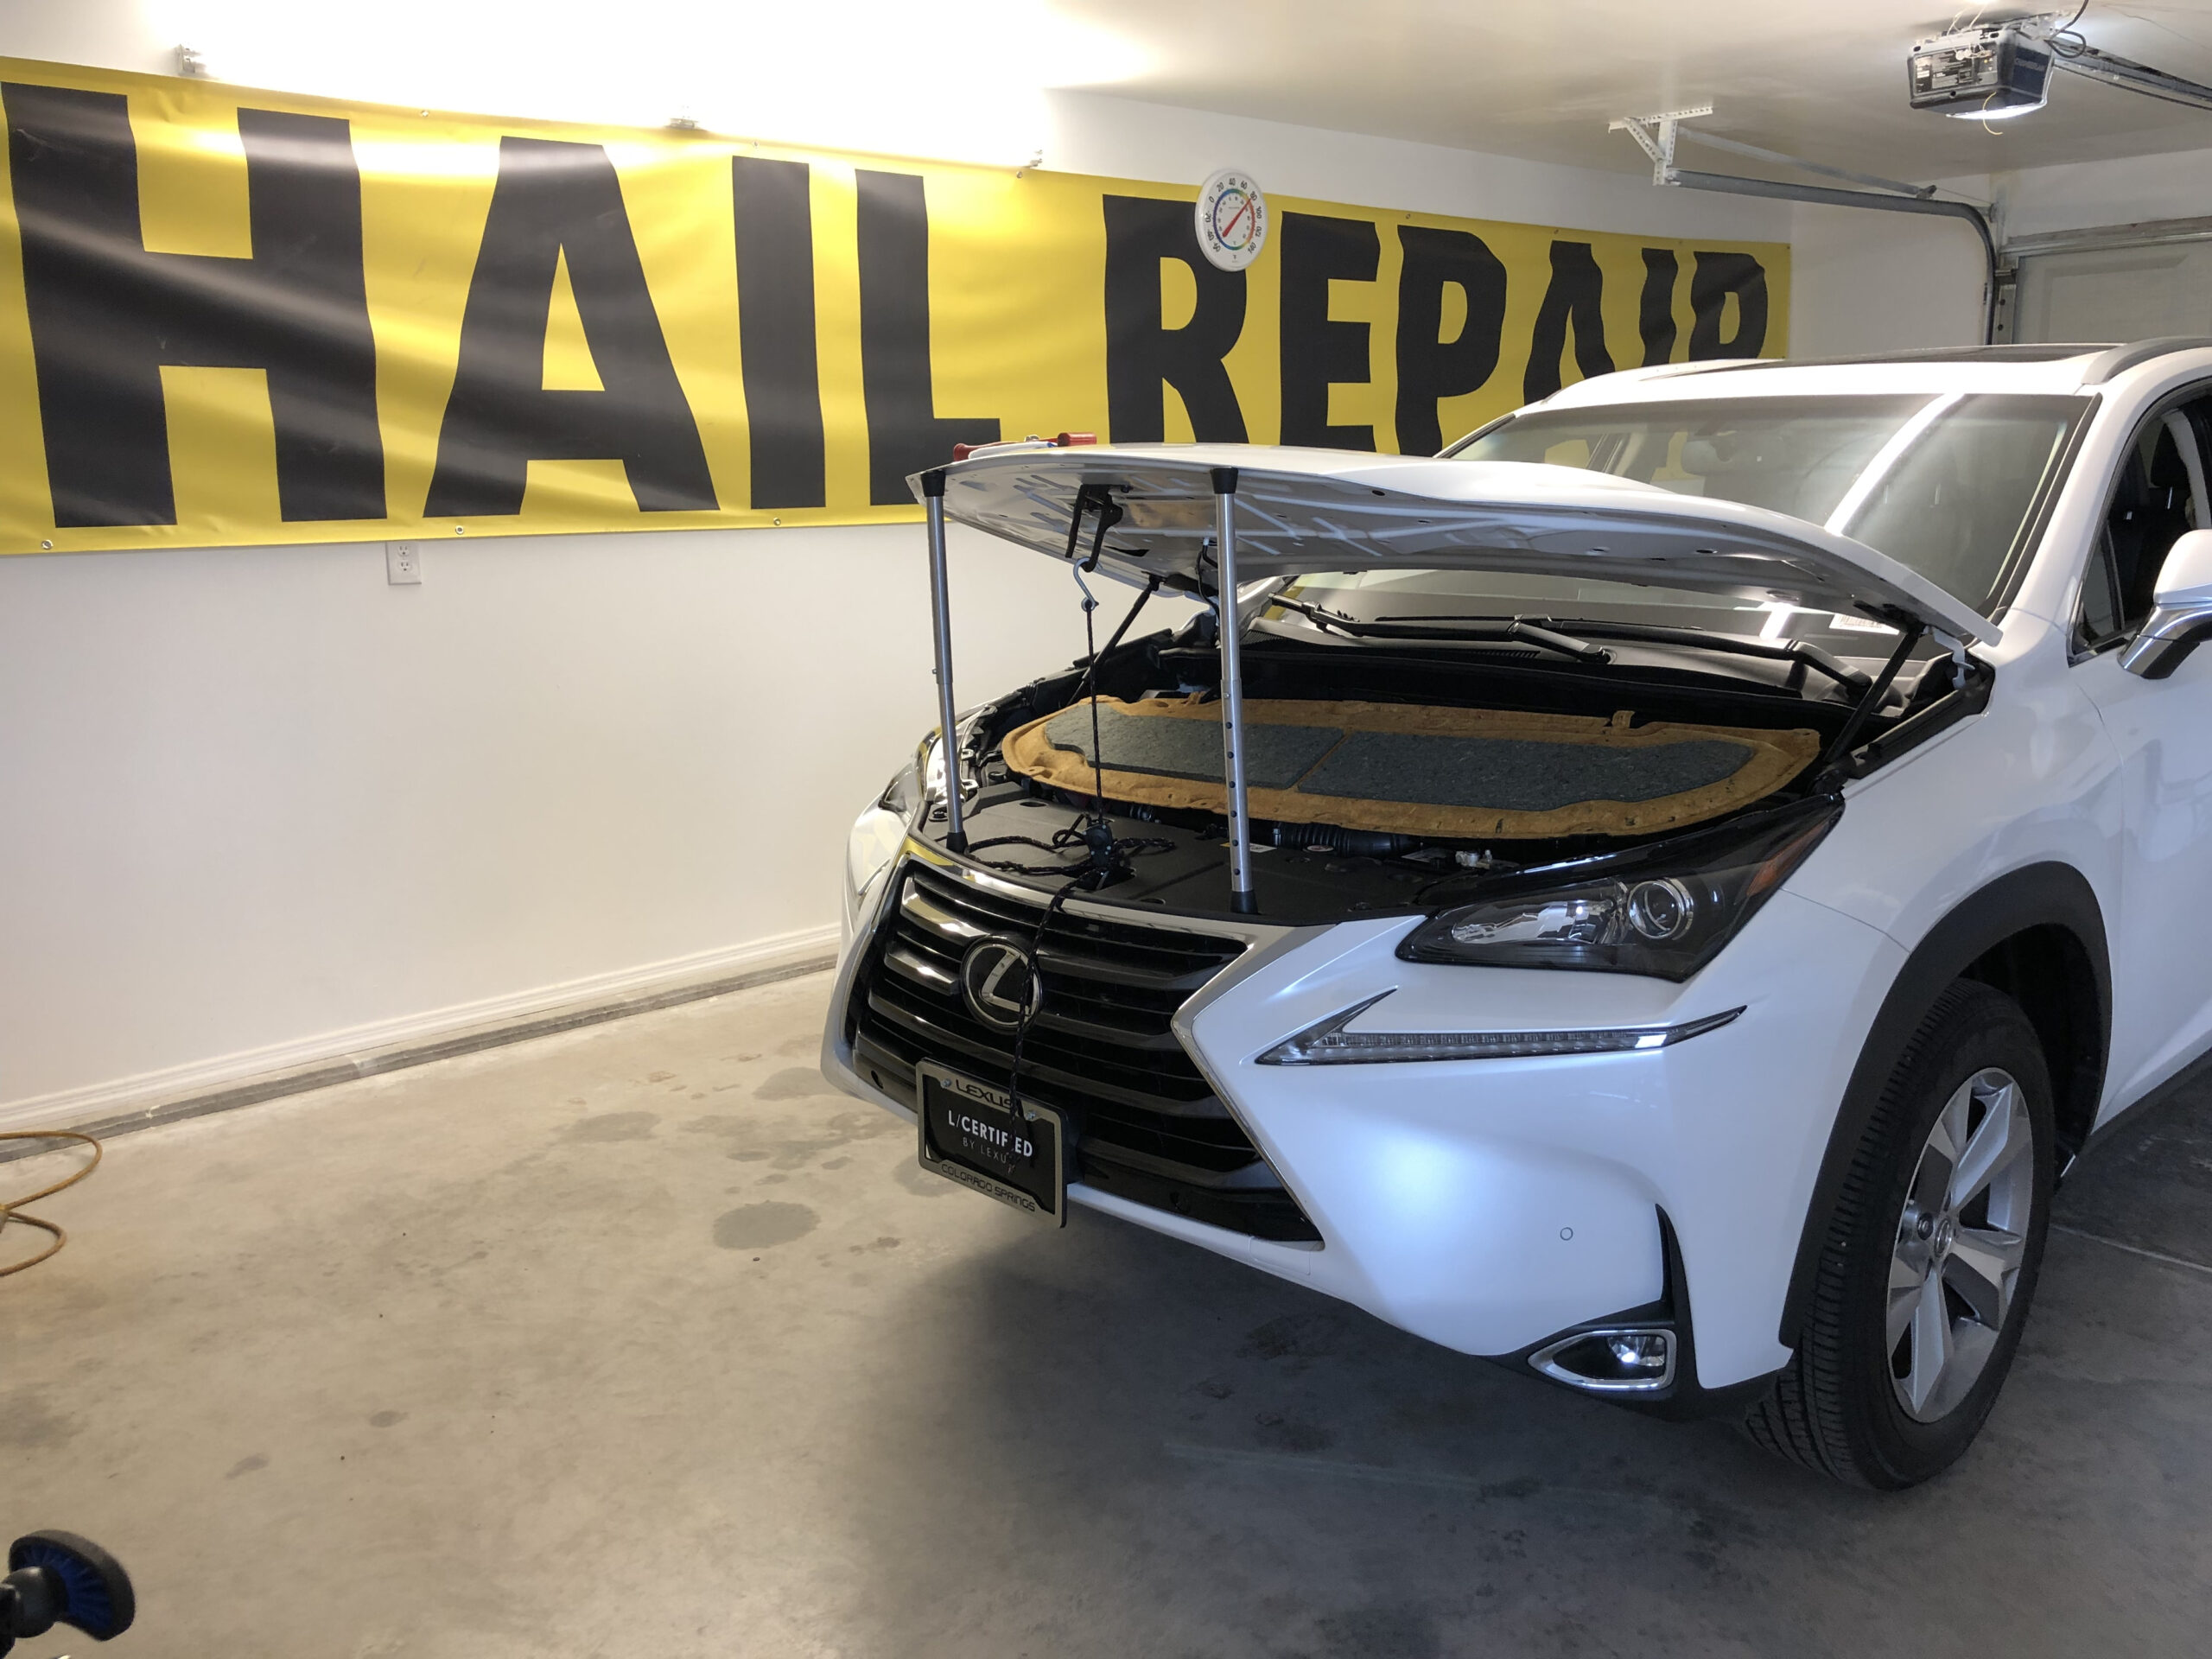 Auto Hail Repair Being Preformed On Lexus